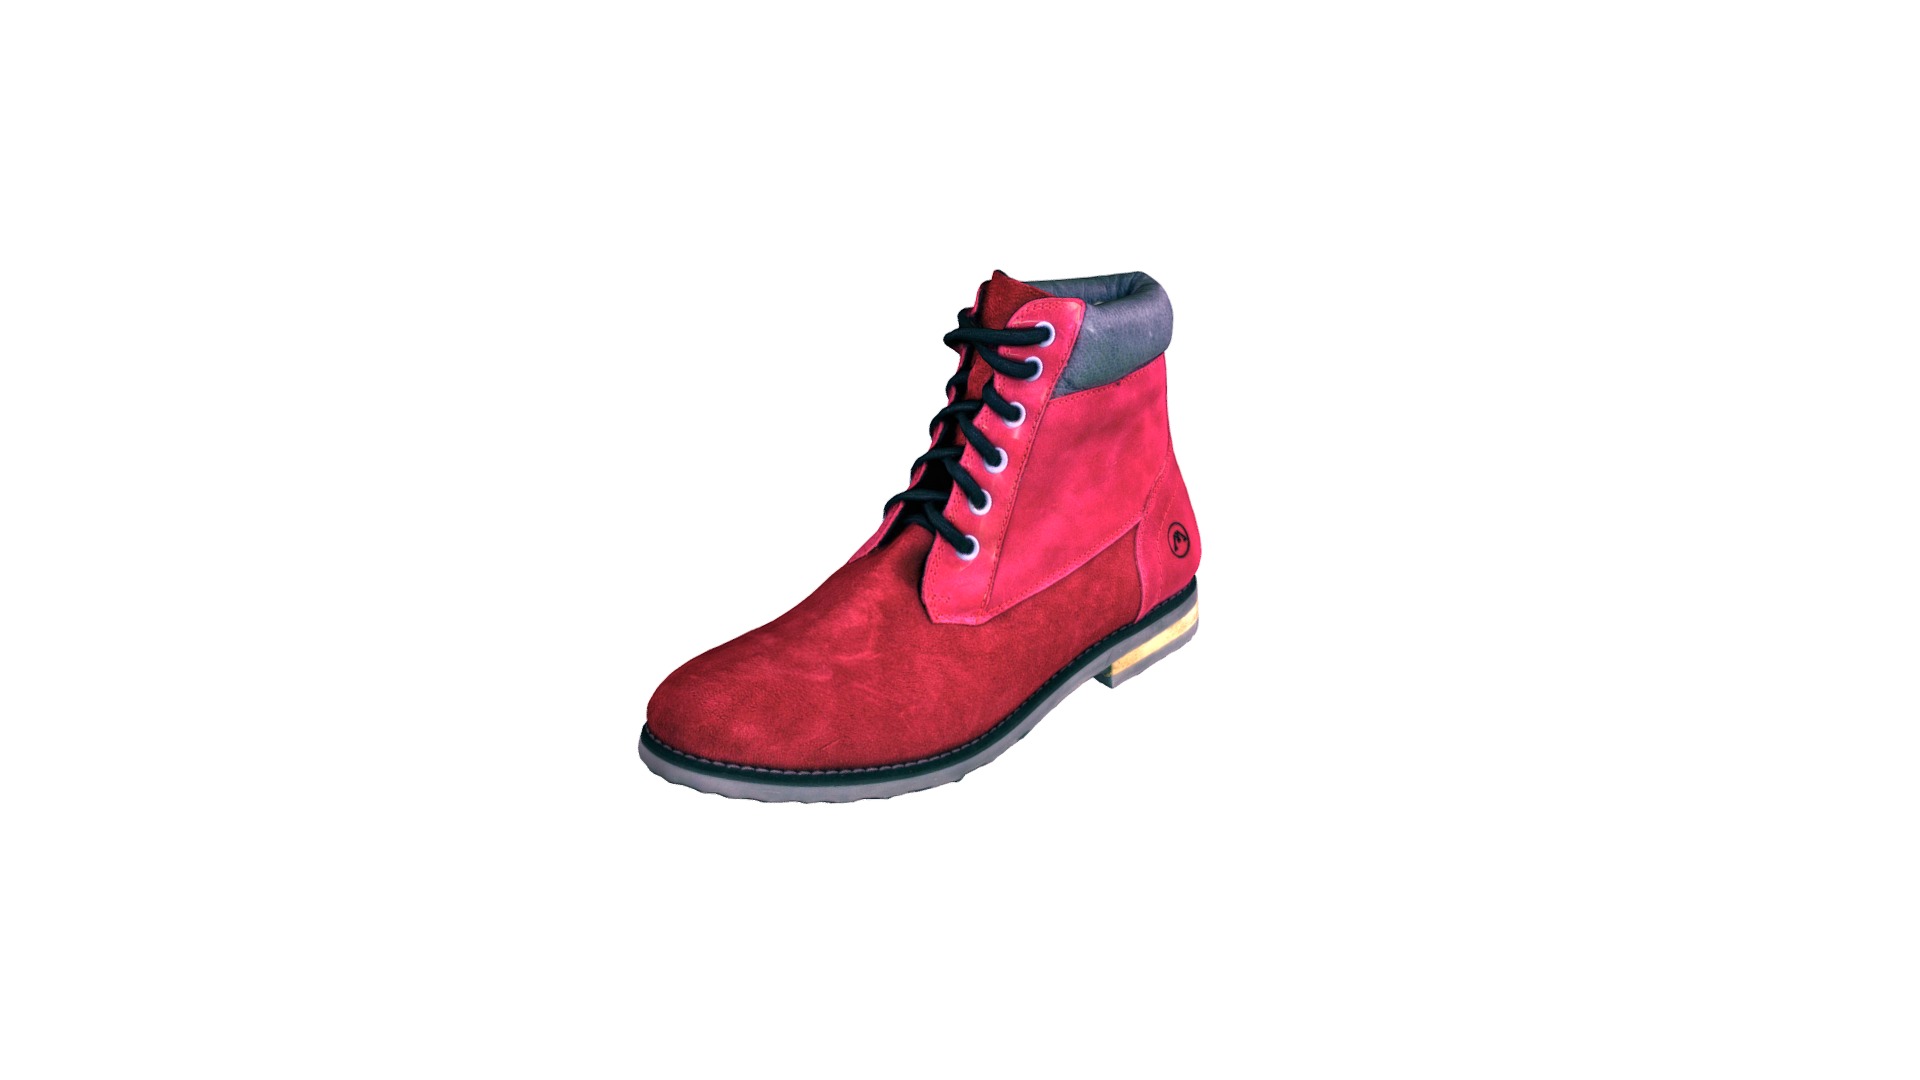 3D model Mestizo Zapatos de Origen - This is a 3D model of the Mestizo Zapatos de Origen. The 3D model is about a red and black shoe.